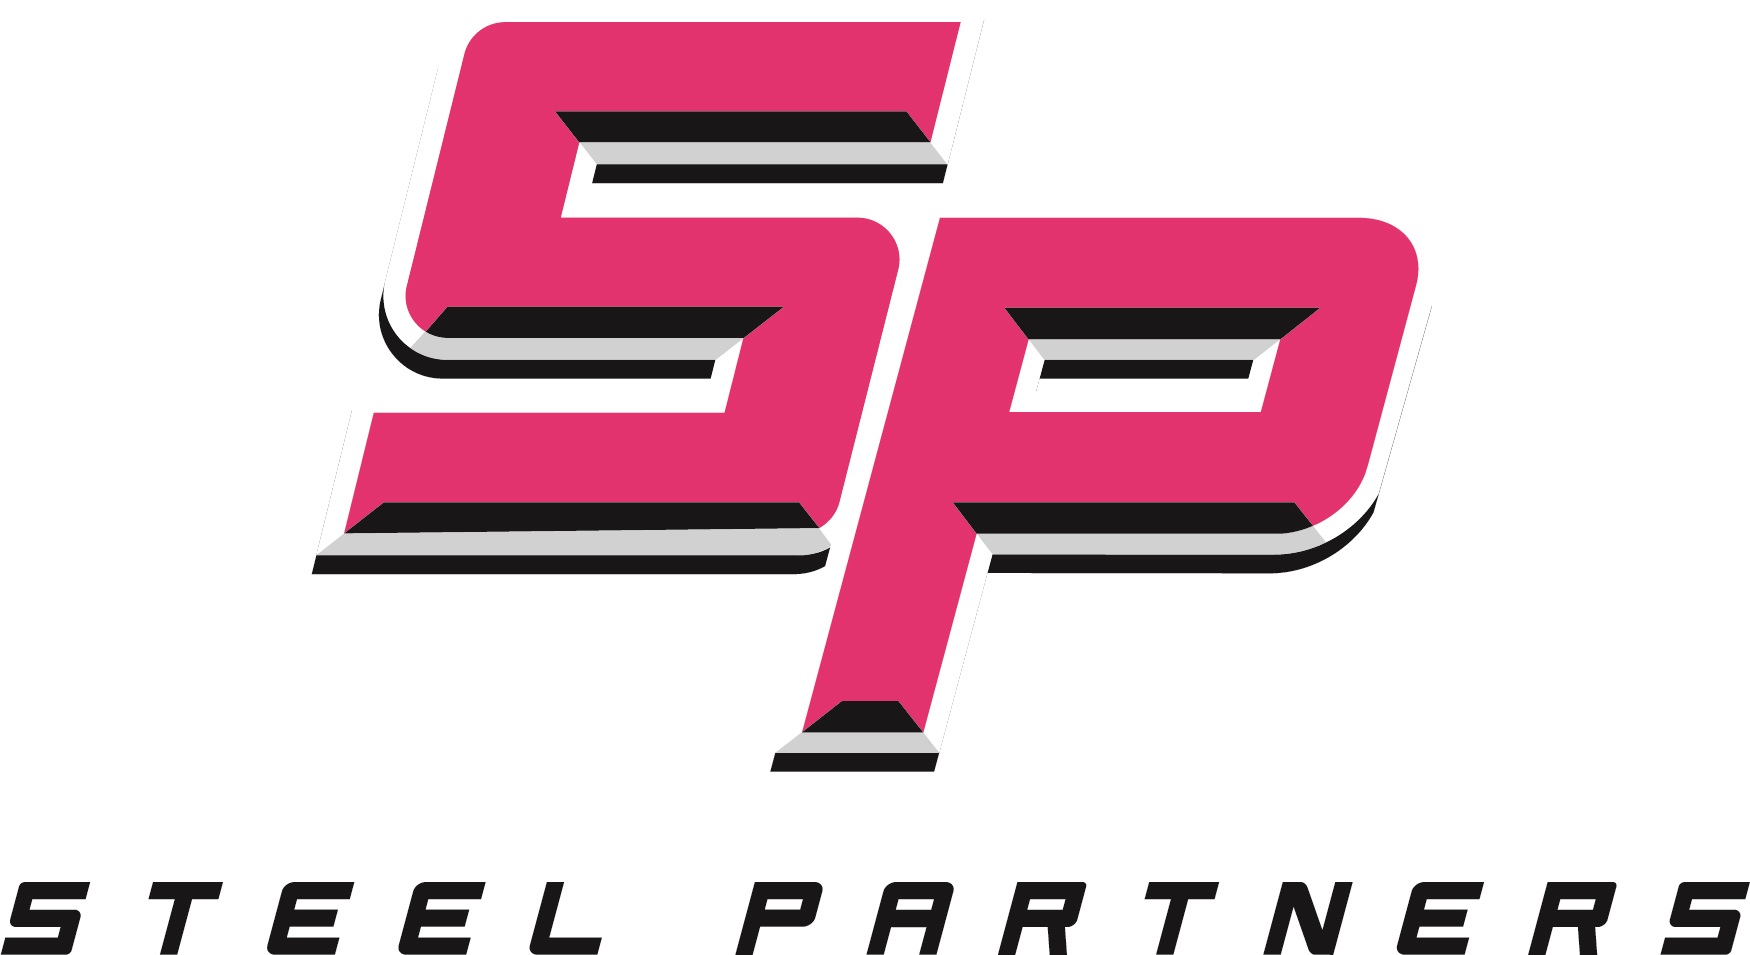 Steel Partners logo - C (002).jpg